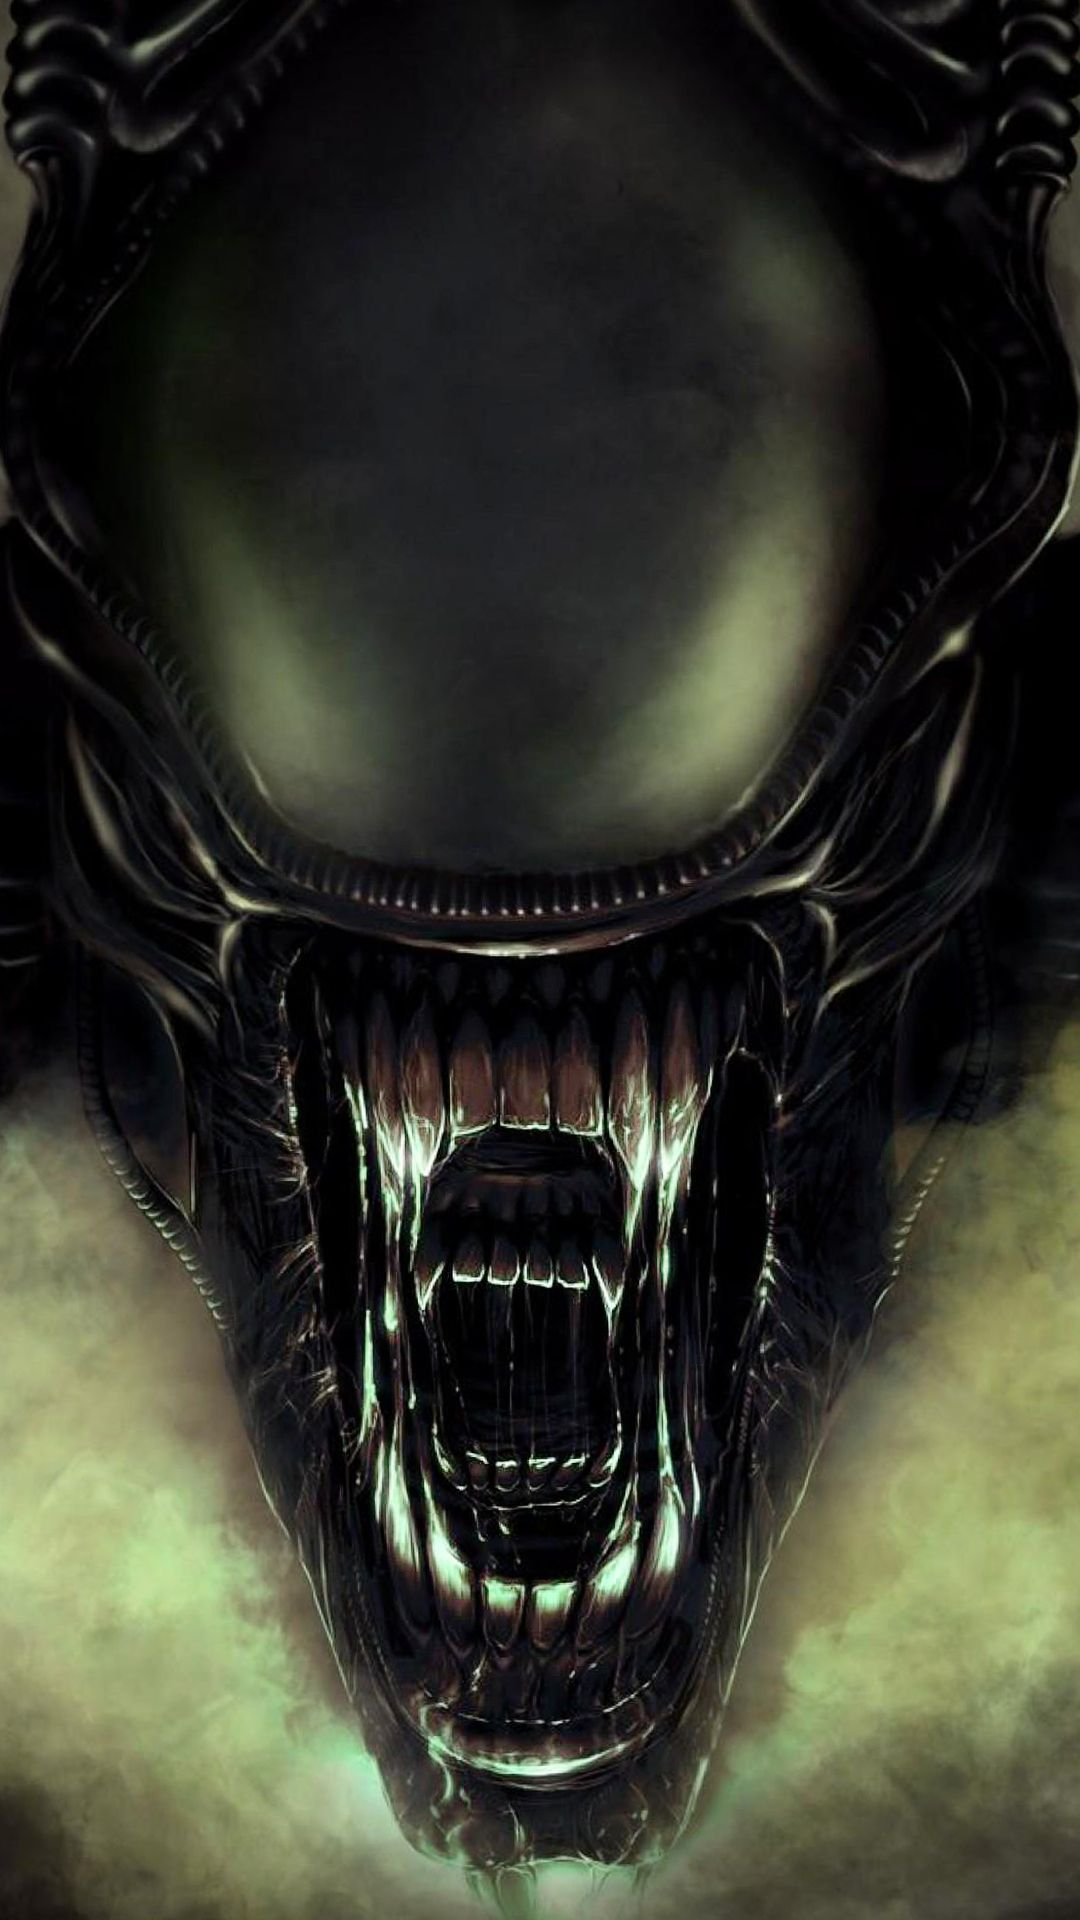 1080x1920 Alien Wallpapers Downloads at | Alien artwork, Predator artwork, Scary wallpaper